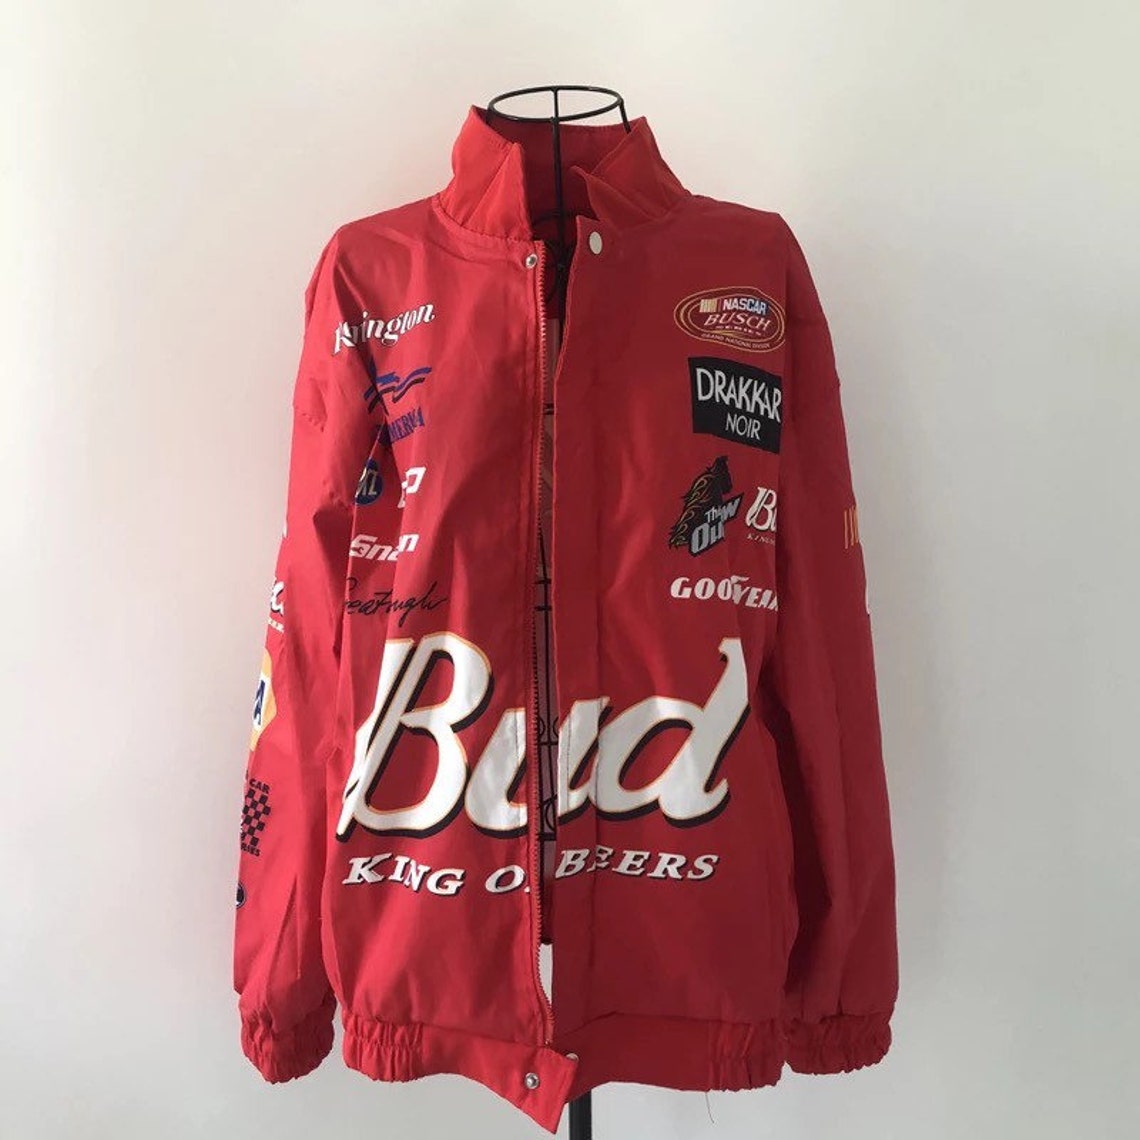 NASCAR Racer Racing Budweiser Jacket - Etsy